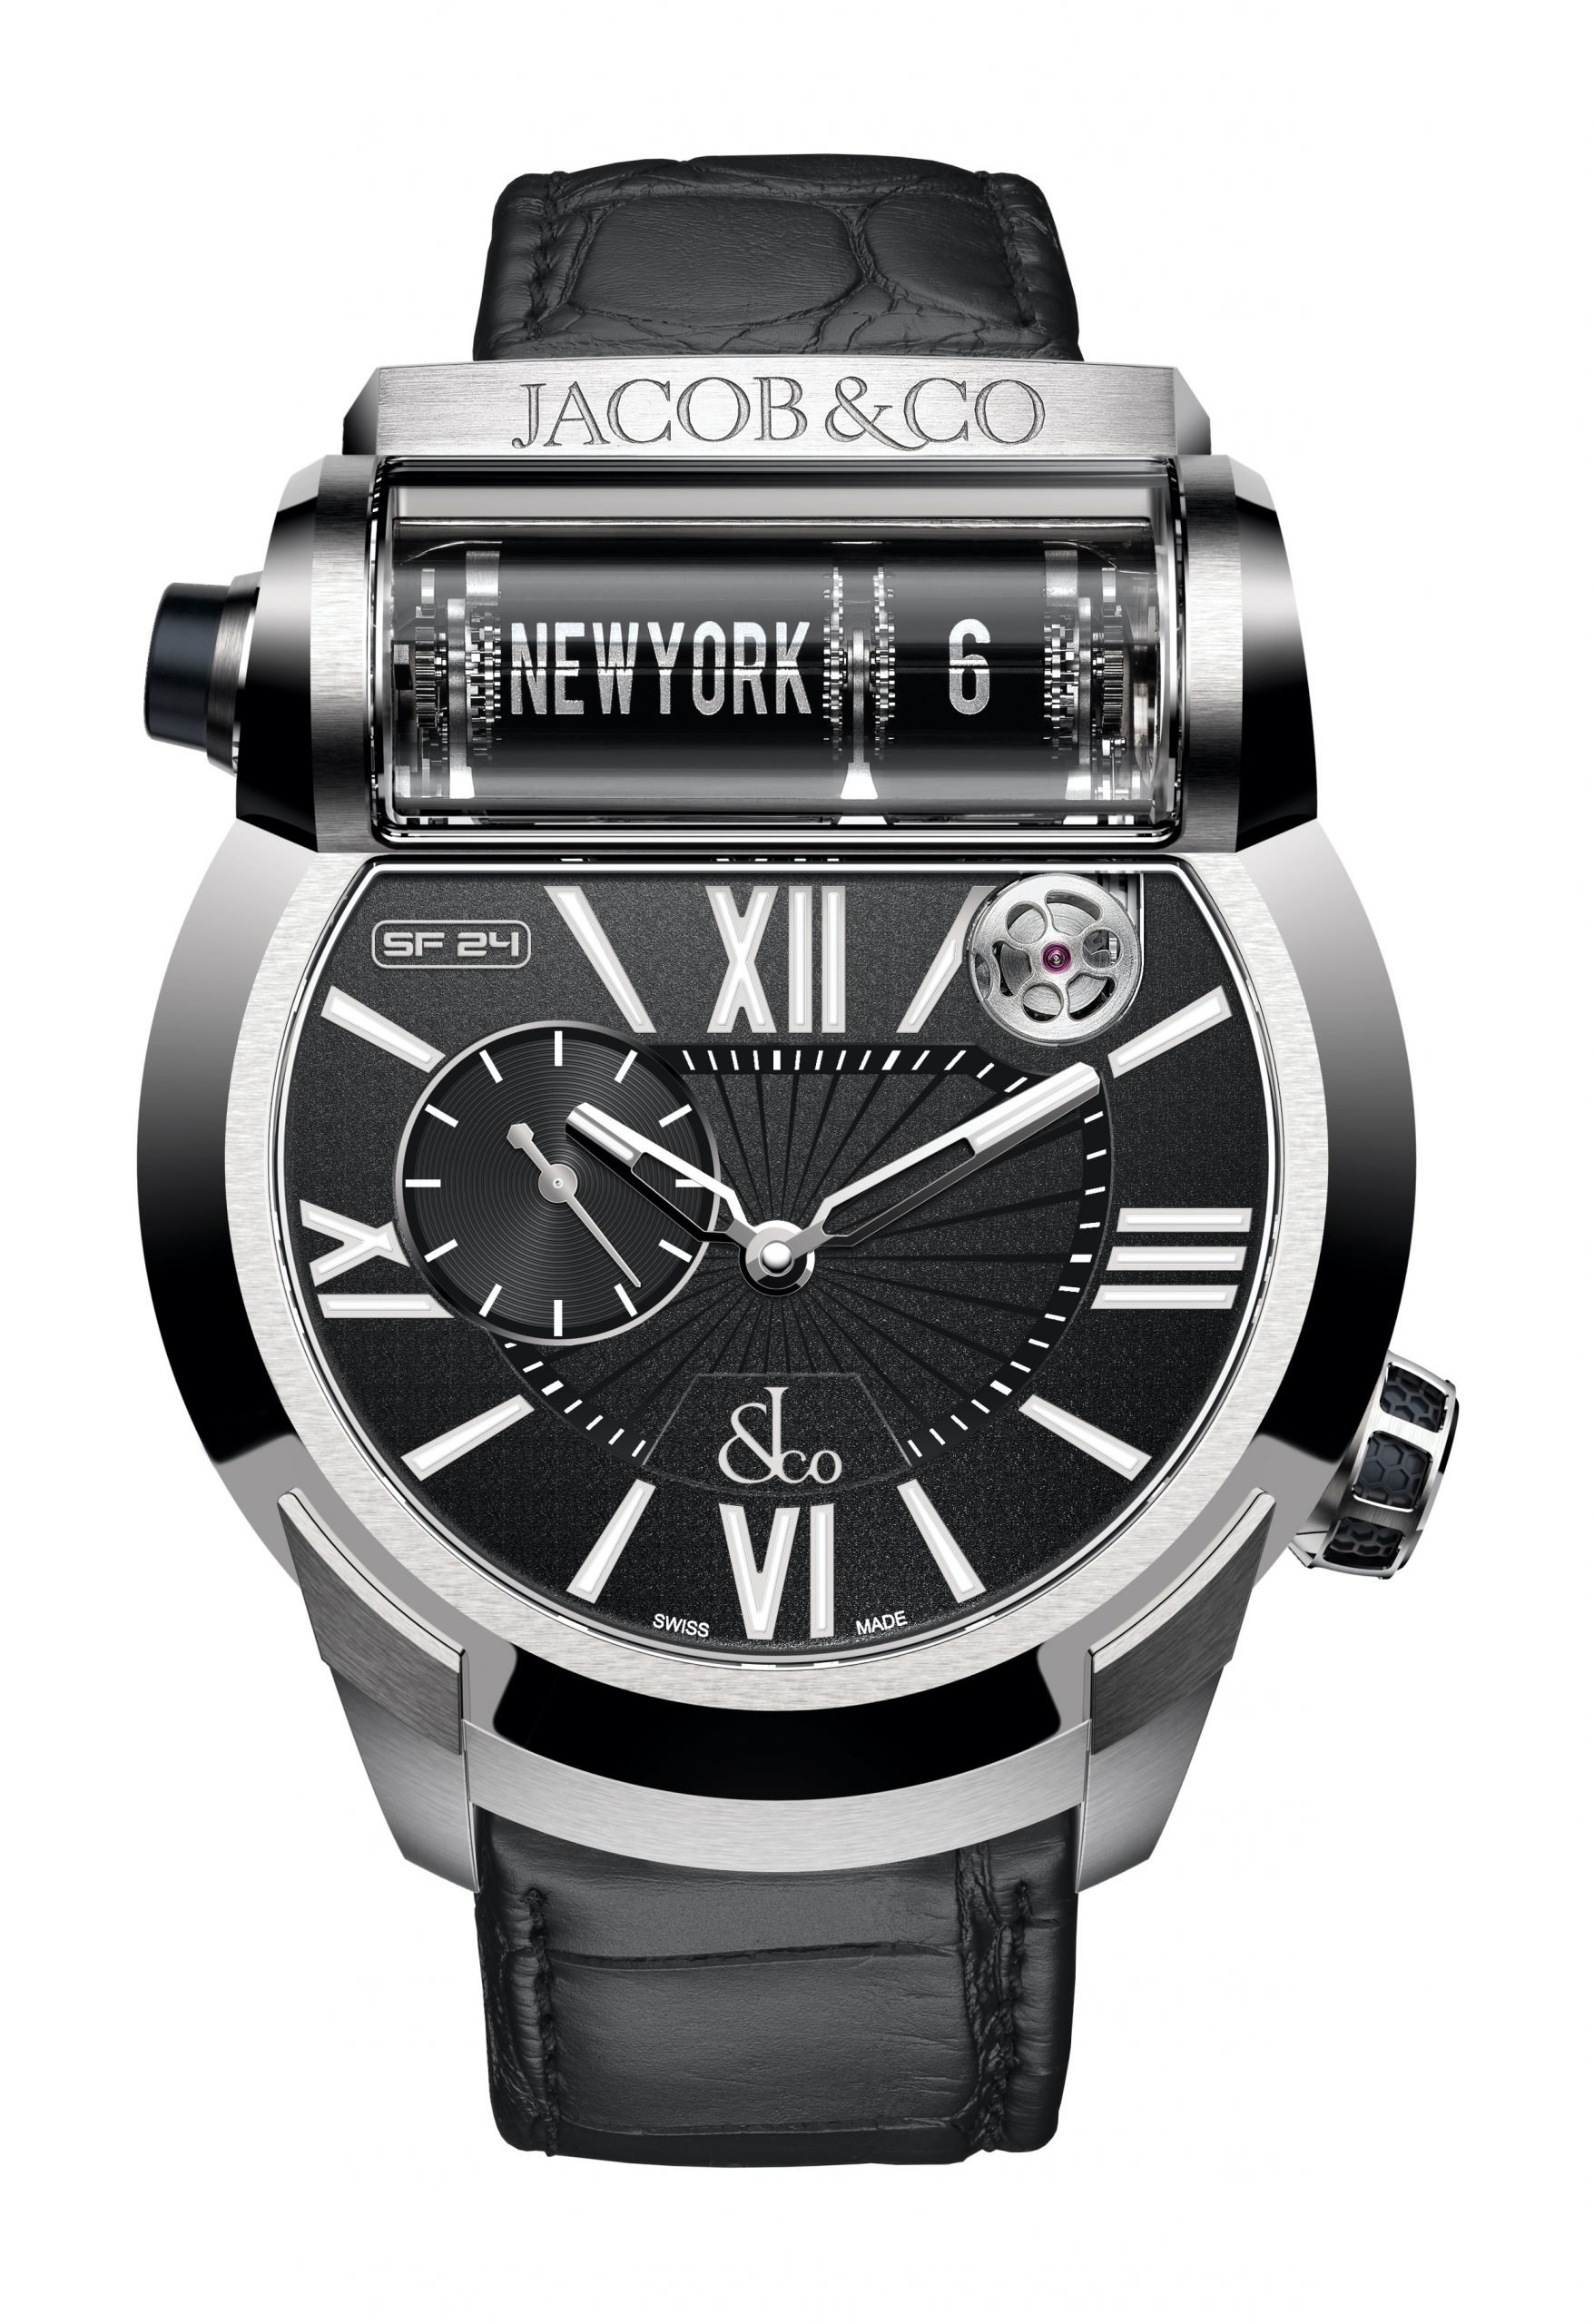 Jacob & Co Epic SF24 replica watch ES101.20.NS.LH.A